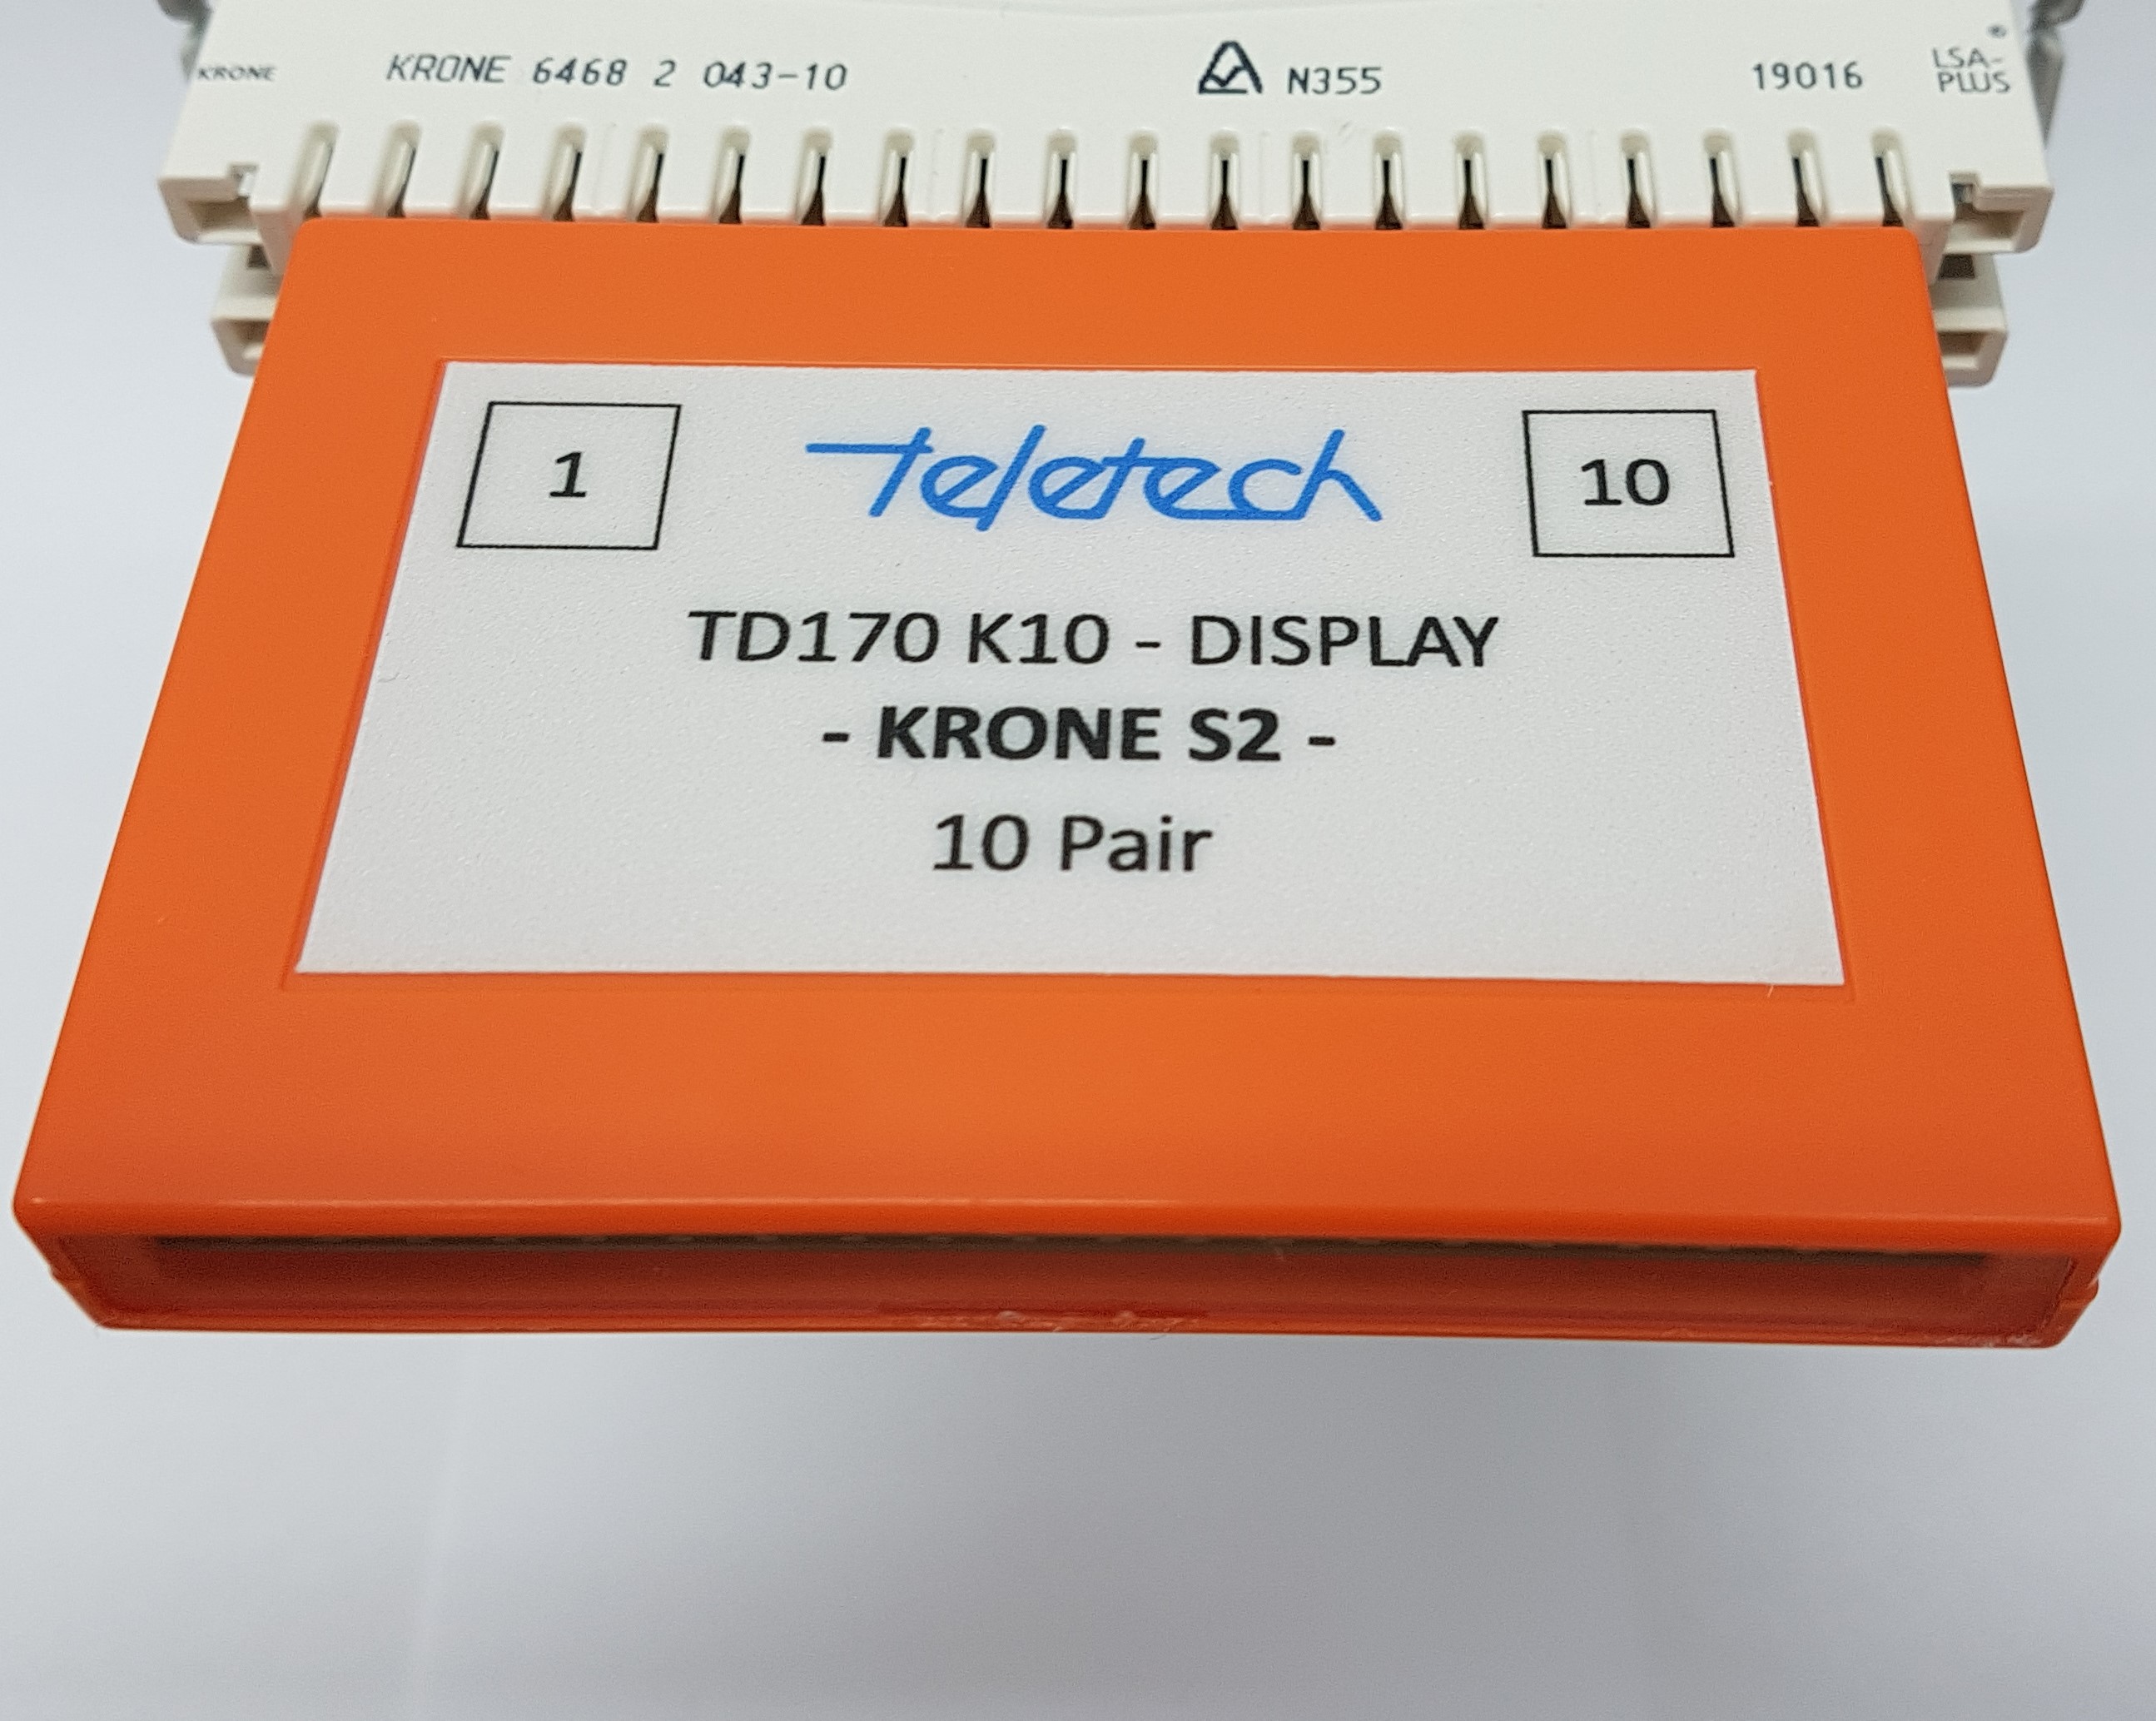 Wizard170 - TX170 Display Unit